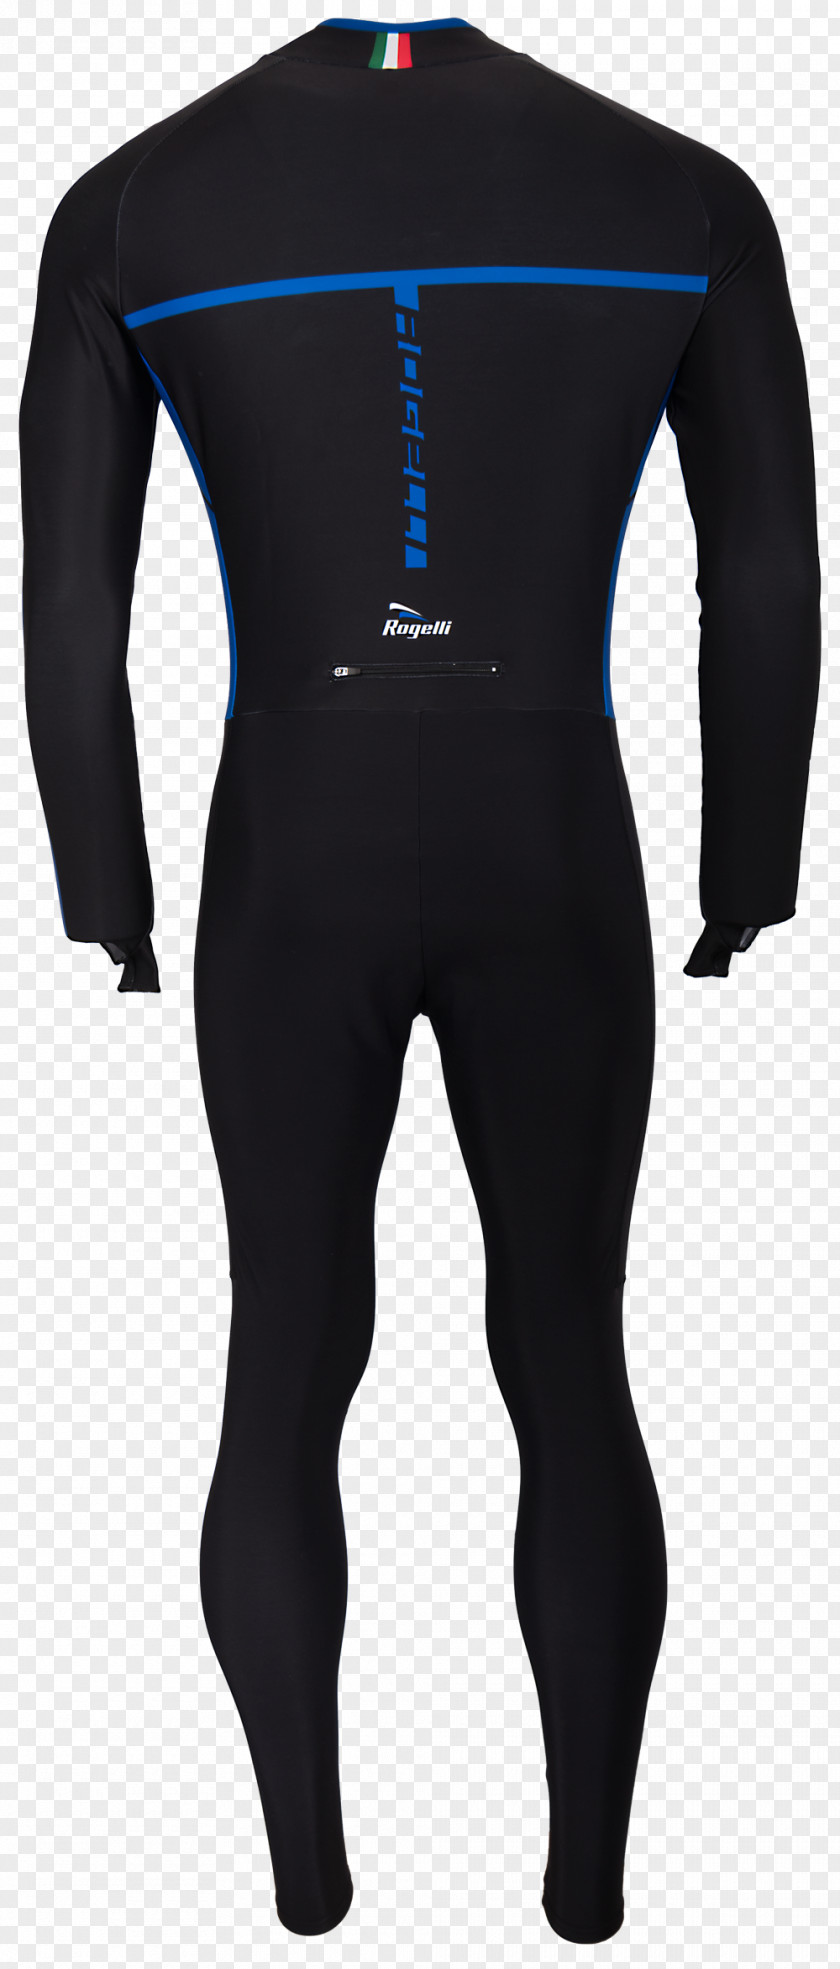 Zipper Wetsuit Clothing Accessories Boyshorts Shoe PNG